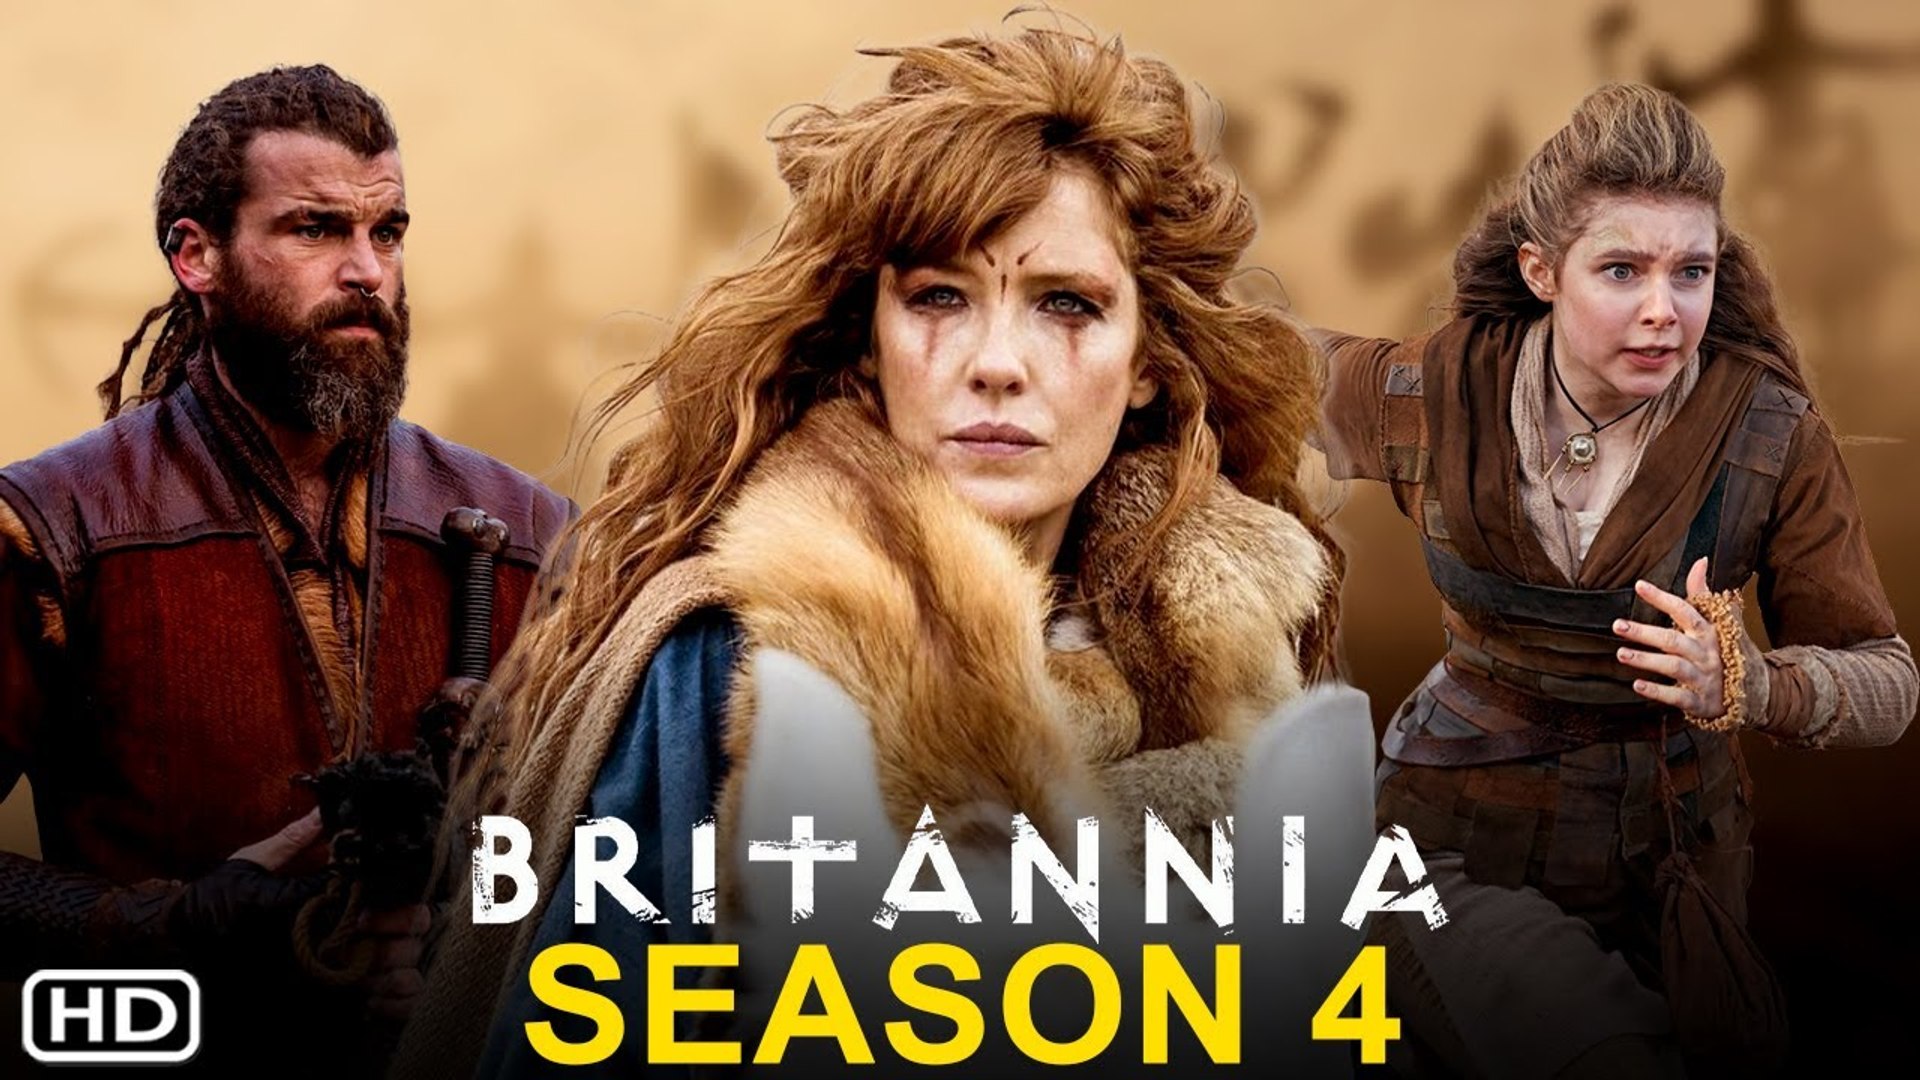 Britannia Season 4 Trailer (2022) - Release Date, Episode 1, Ending, David  Morrissey, Kelly Reilly - video Dailymotion